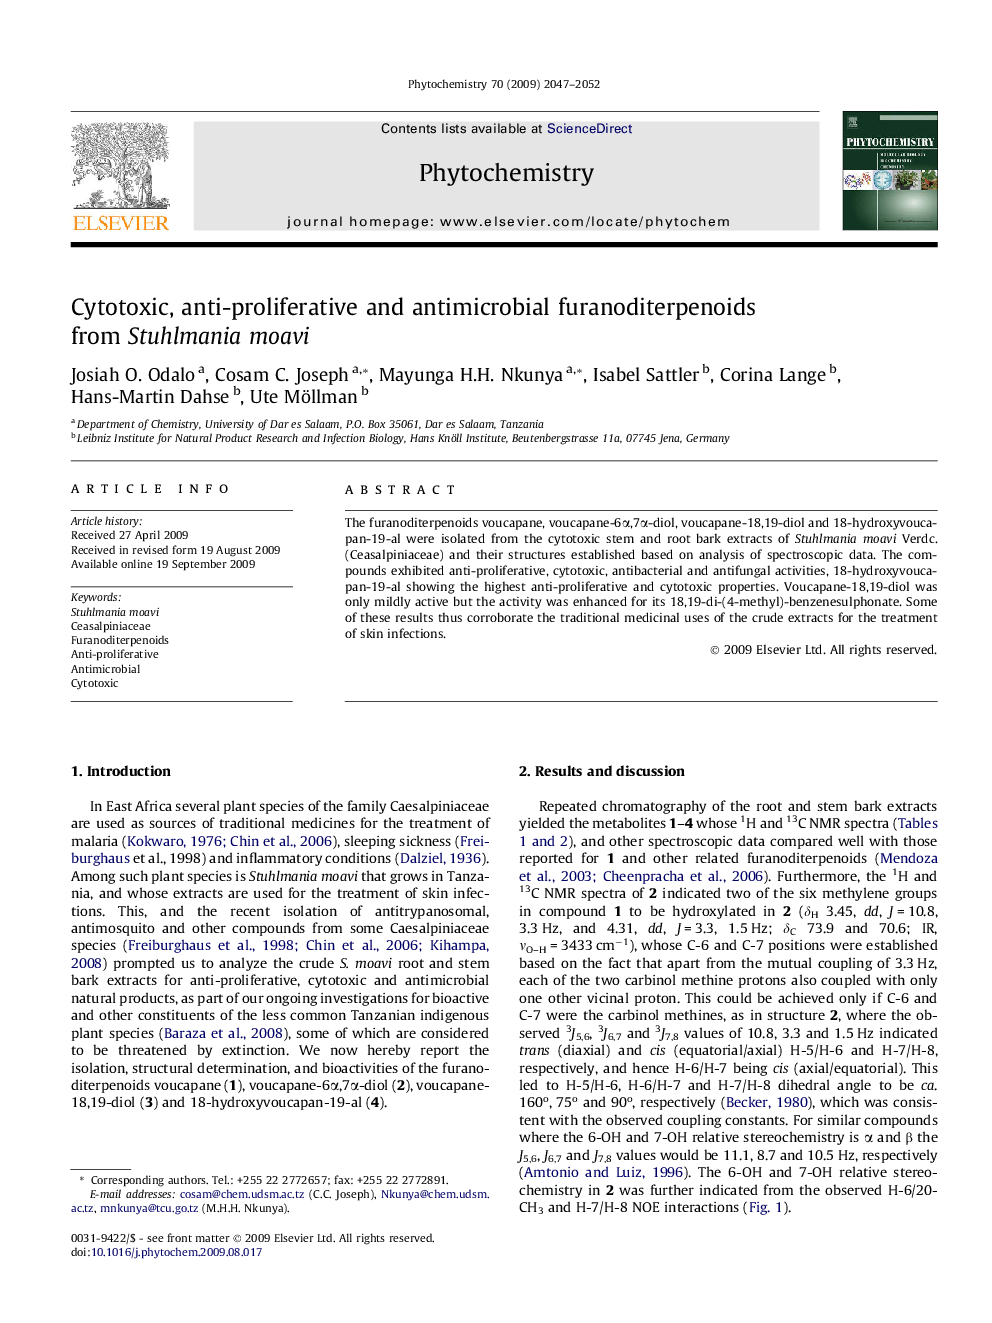 Cytotoxic, anti-proliferative and antimicrobial furanoditerpenoids from Stuhlmania moavi